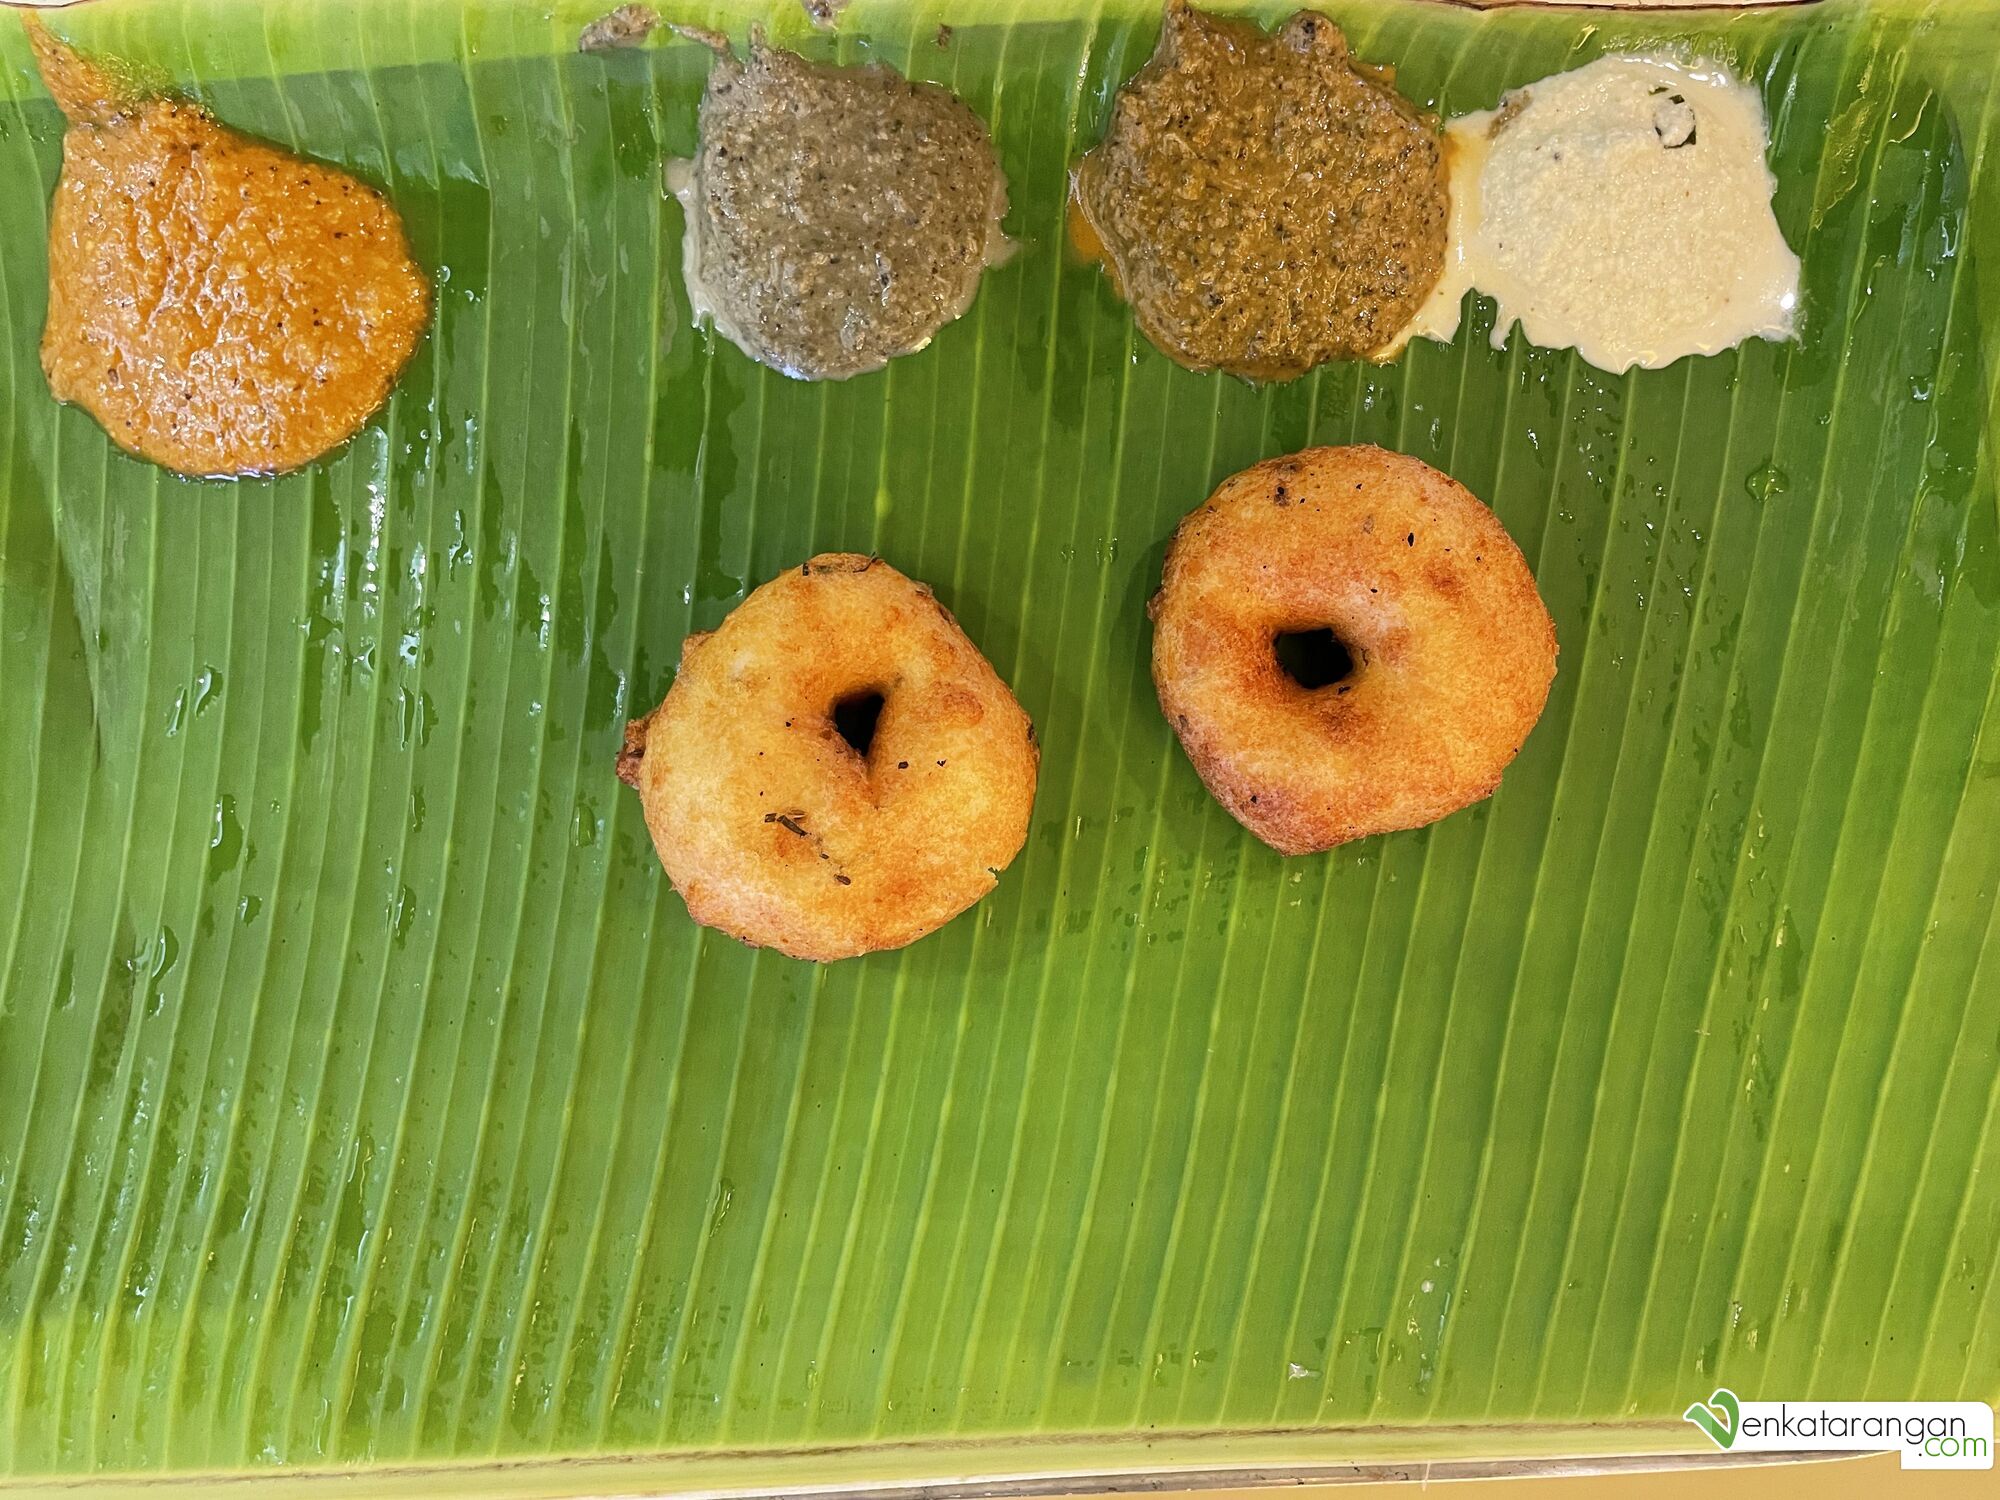 Tasty vadais with four chutneys - சுவையான நான்கு வகை சட்னி மற்றும் சூடான வடைகள் 